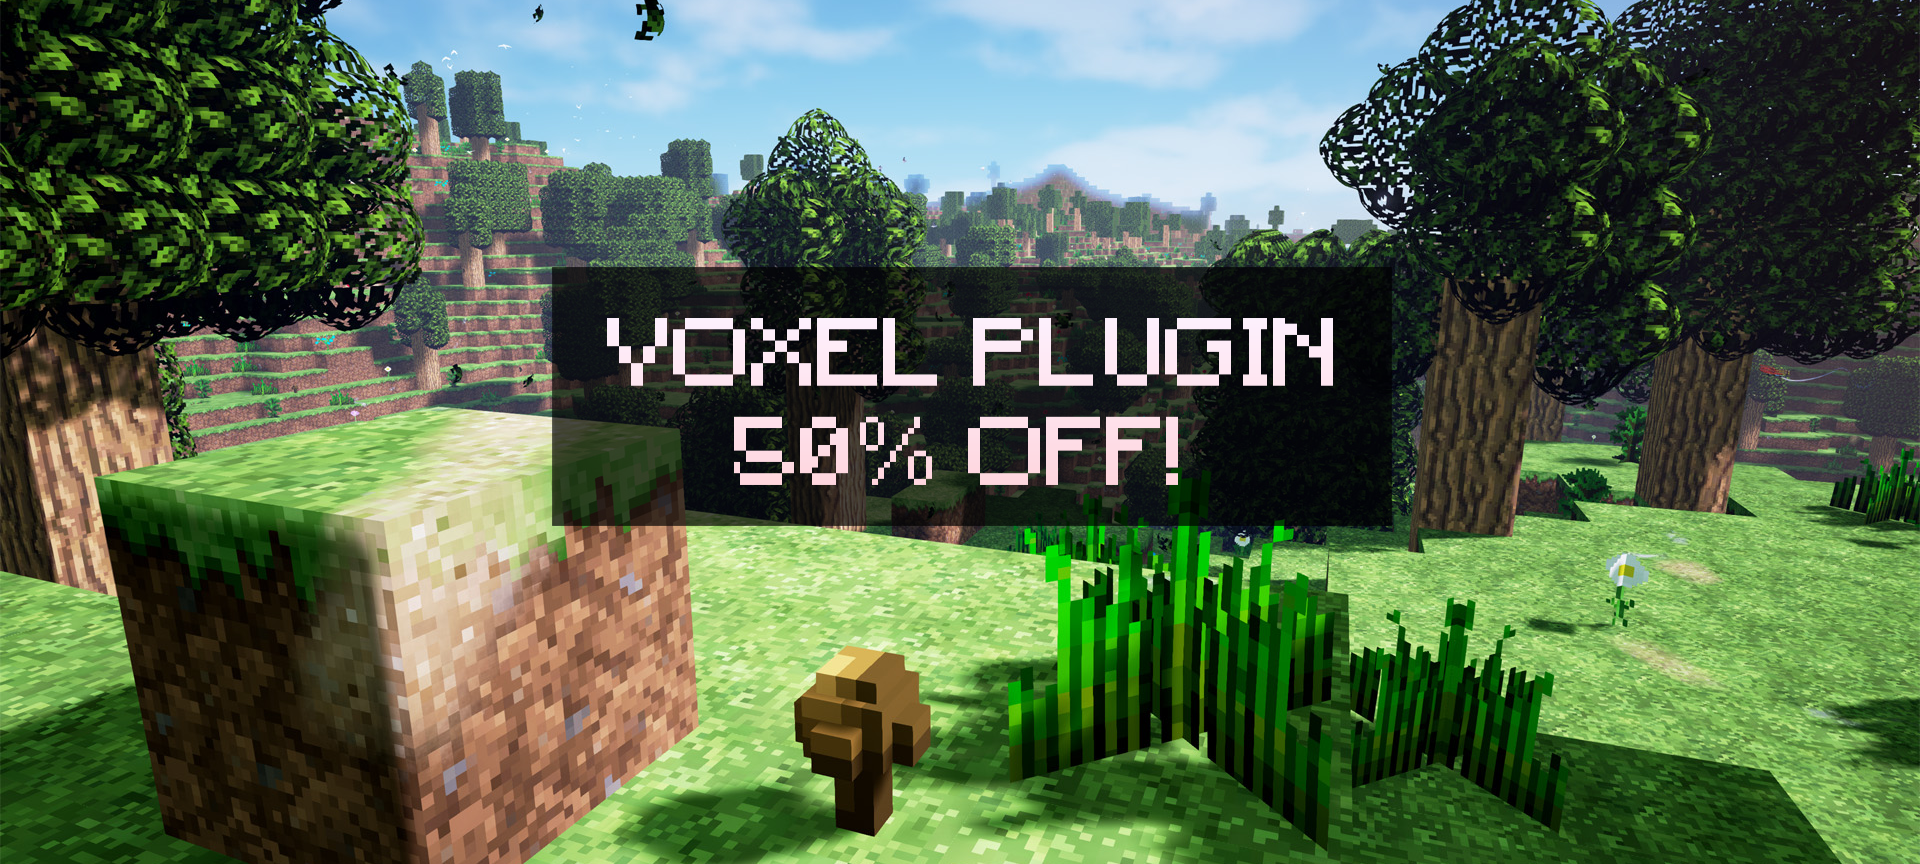 Voxel Sinbox Discount MC 50%off